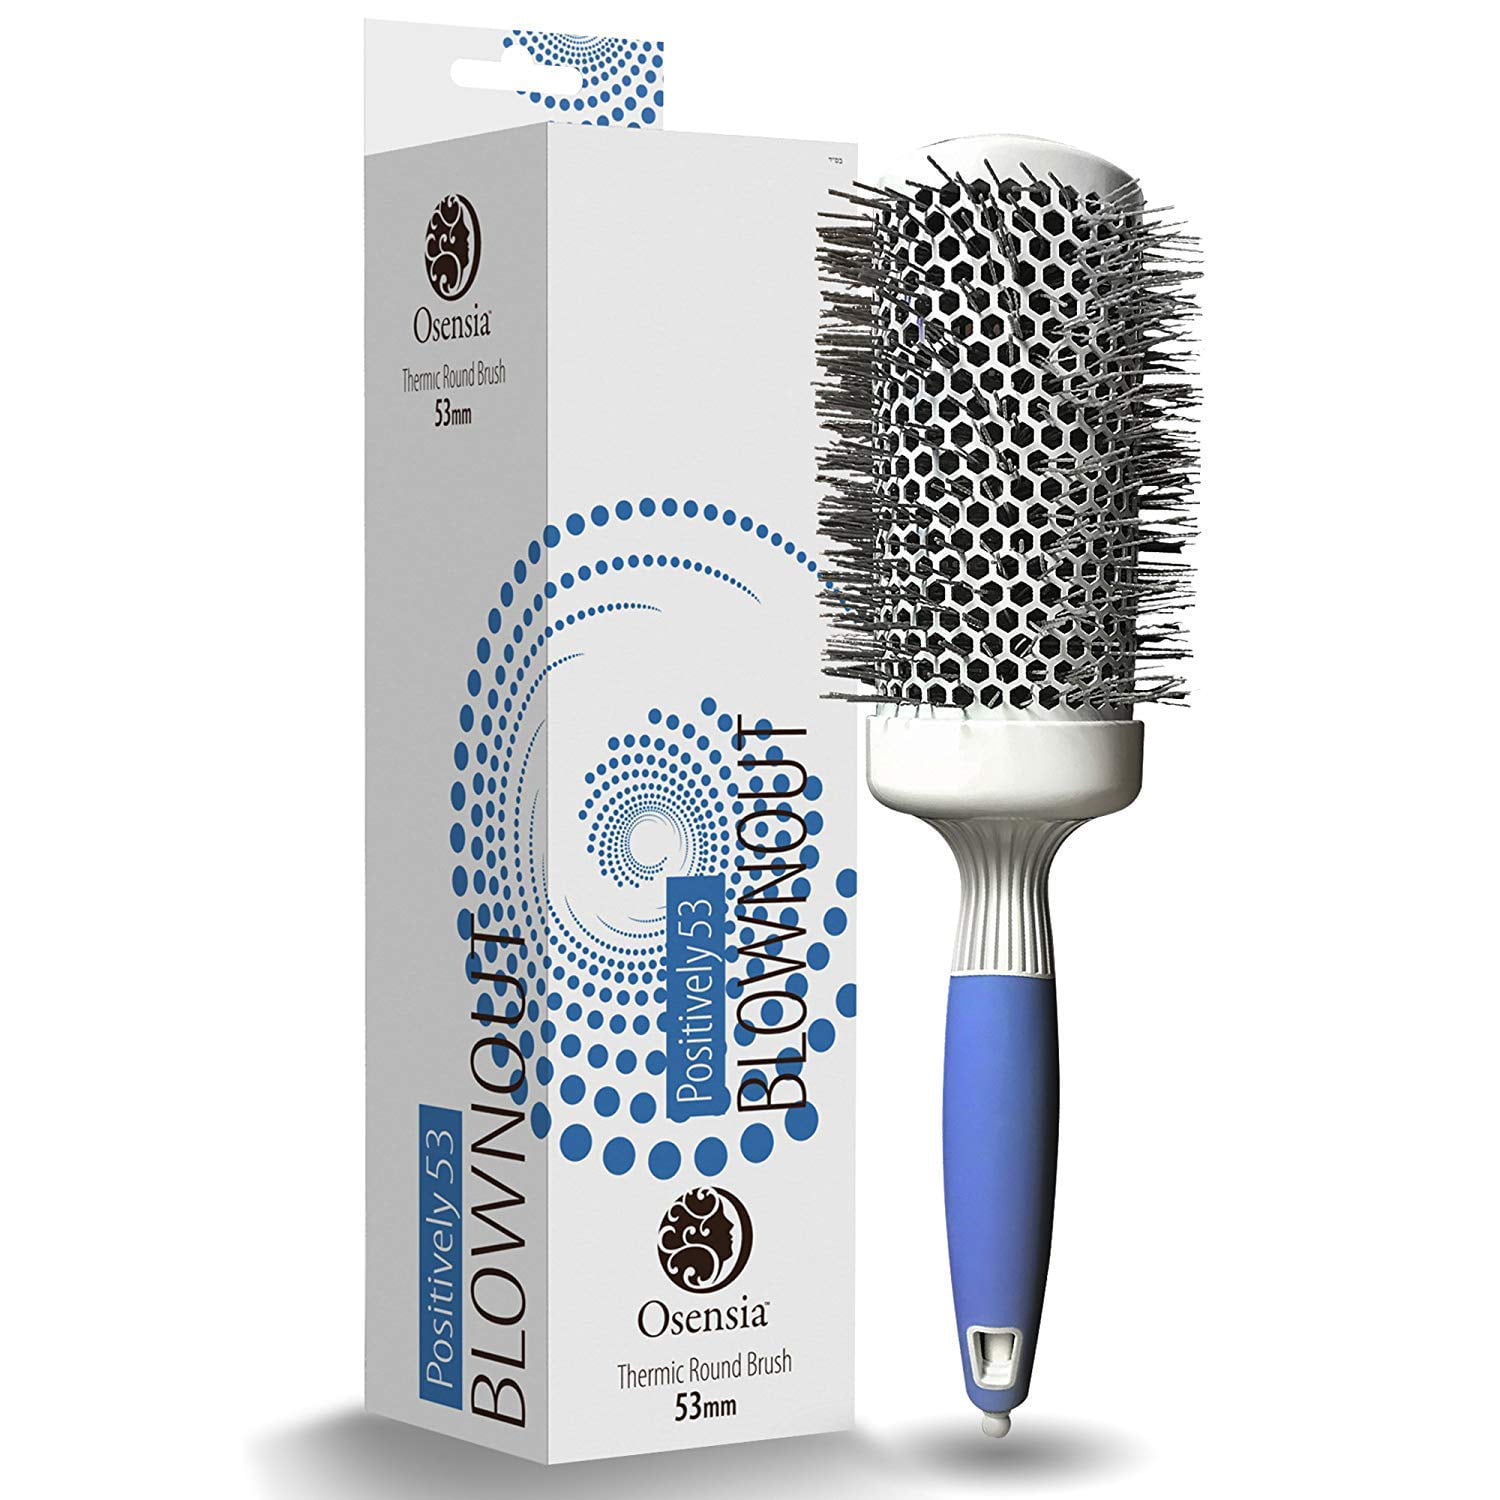 Round brush. Щётка XL Pro large керамическая. Max Pro Ceramic Round hair Dryer Brush. Round Ceramic Brush. Round Brush for hair.